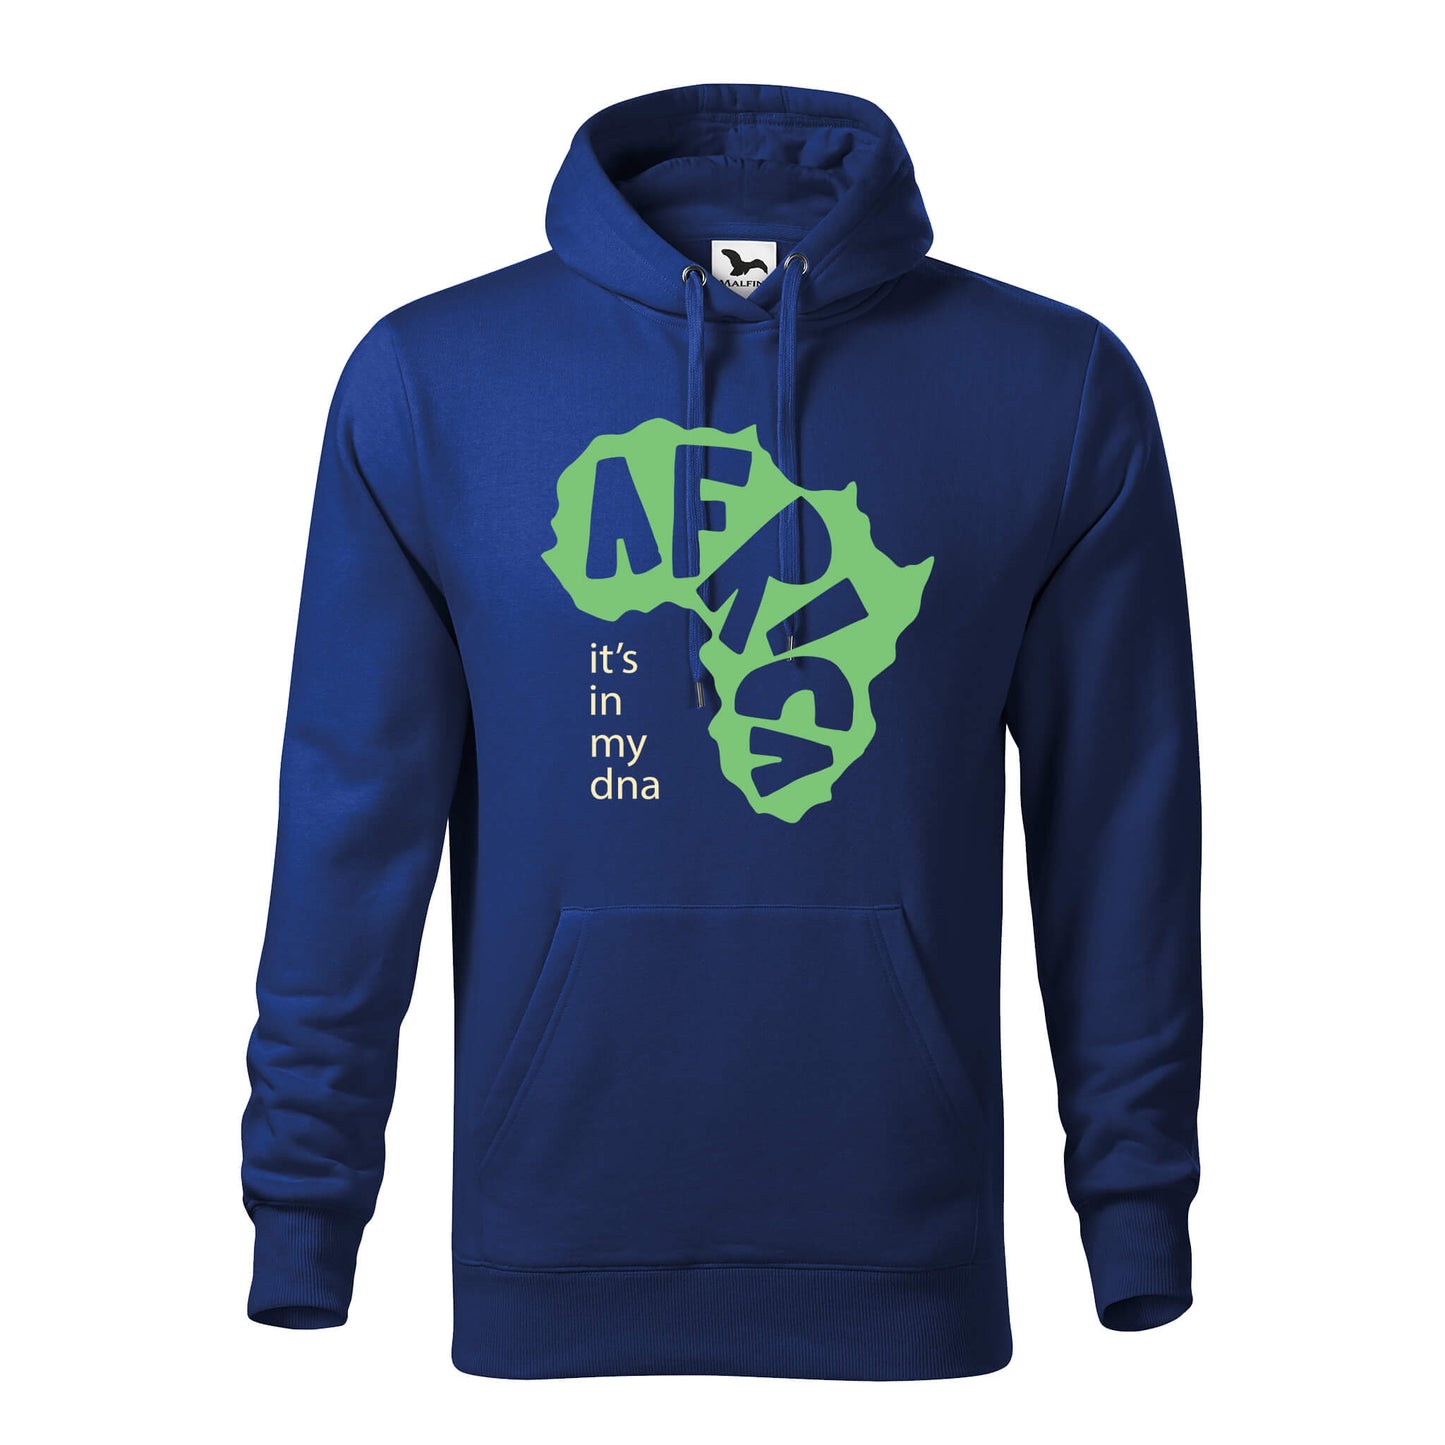 Africa in my dna hoodie - rvdesignprint